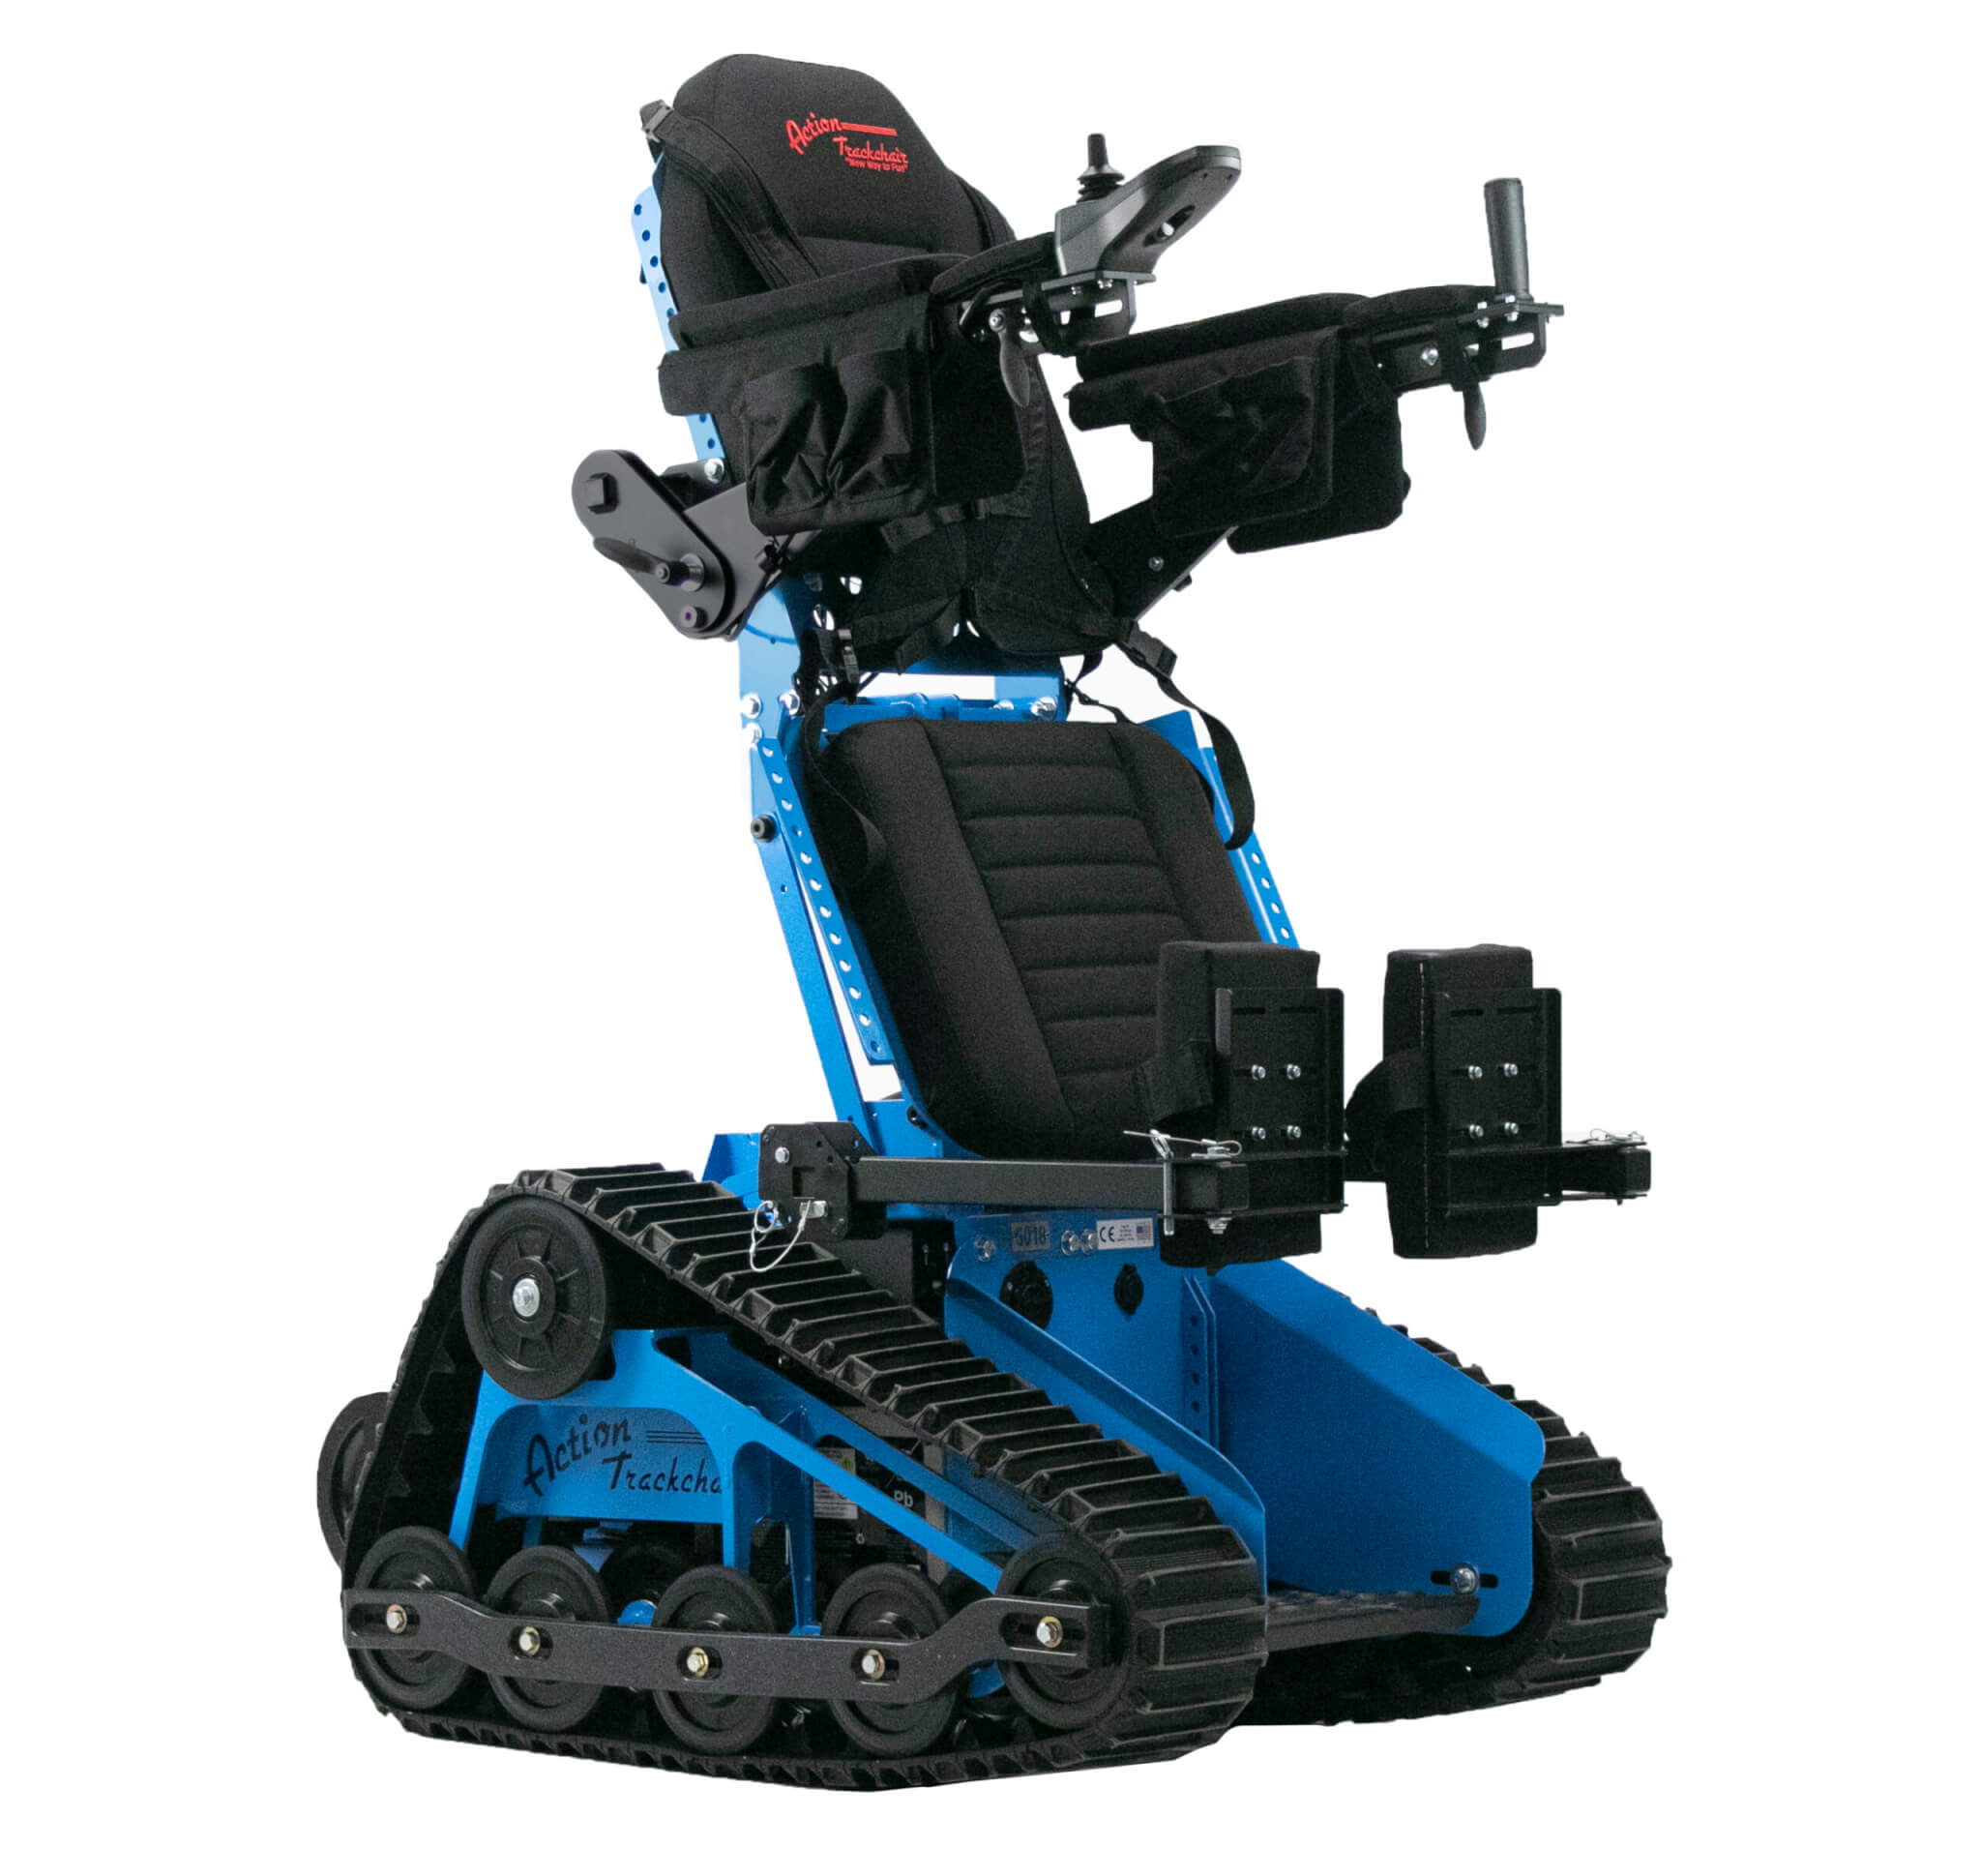 Action Trackstander NR All Terrain Wheelchair